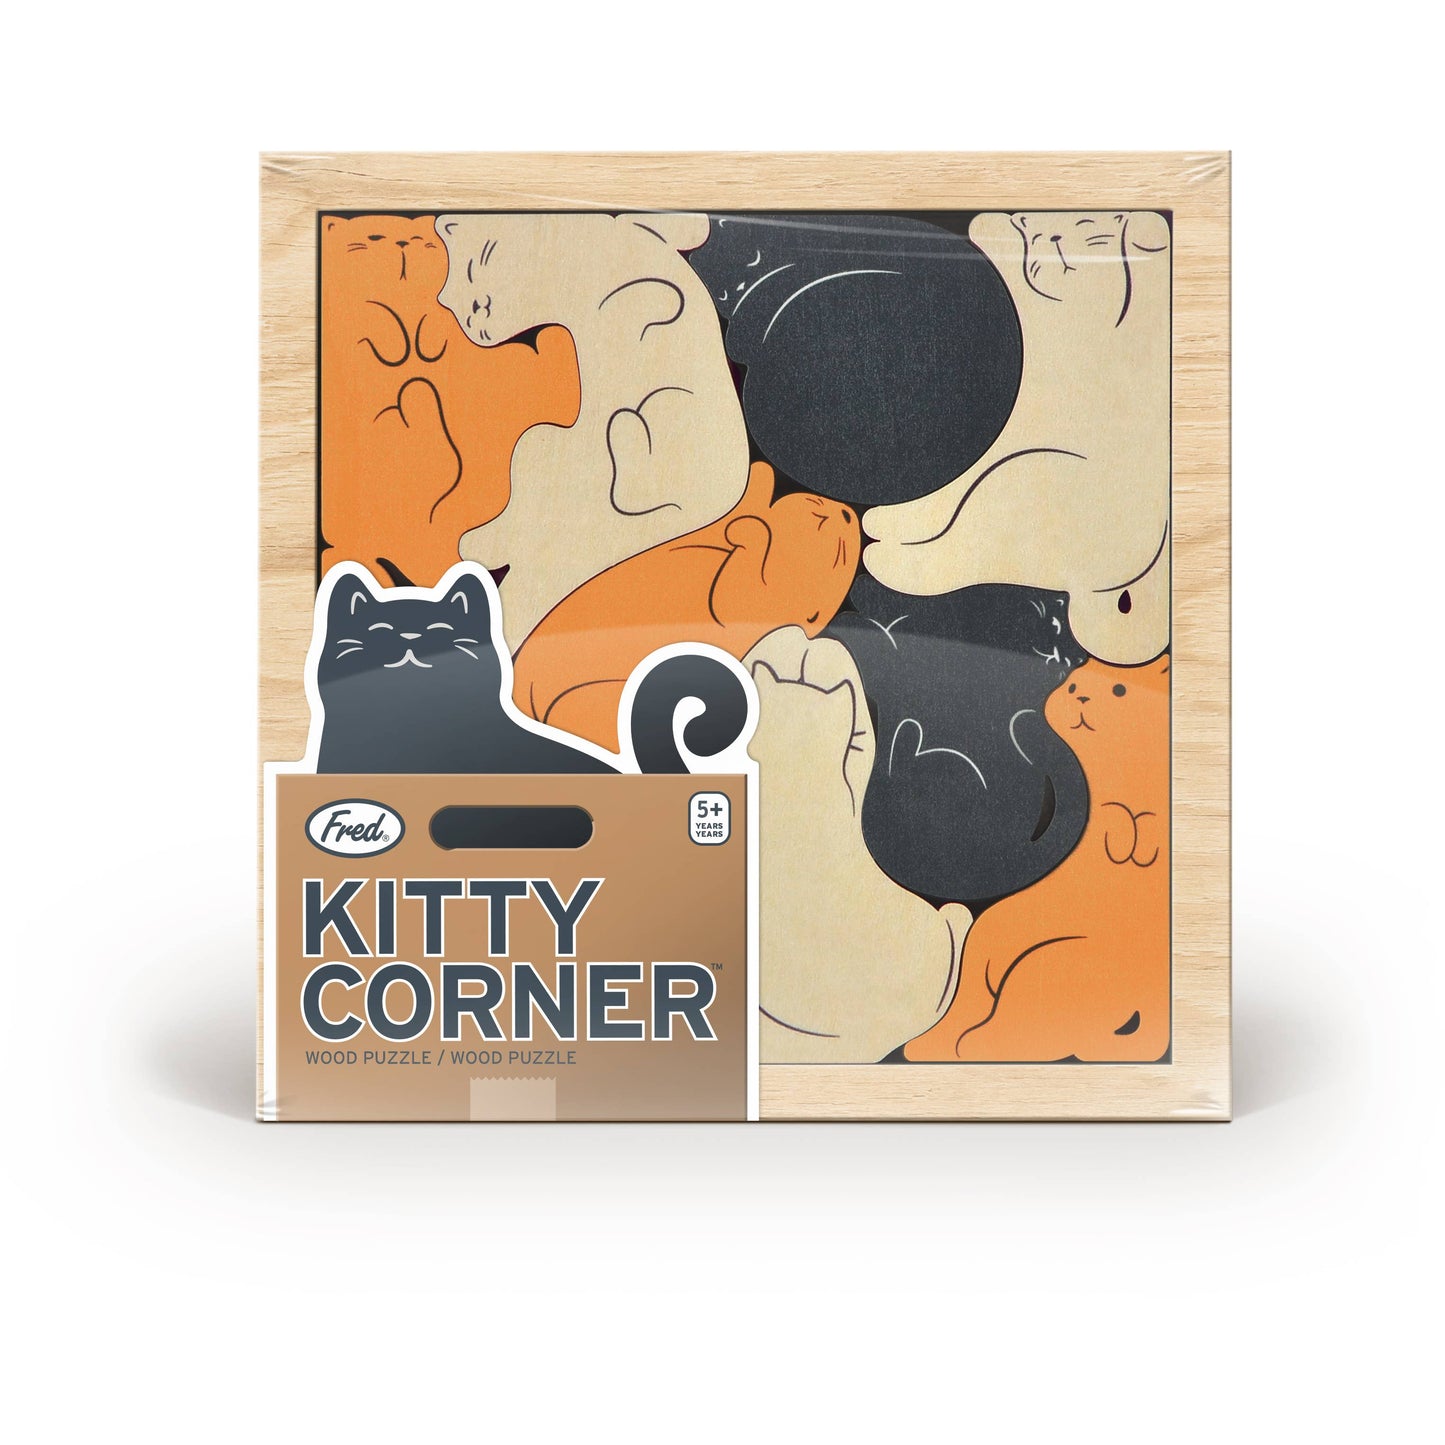 Kitty Corner- Wooden Puzzle